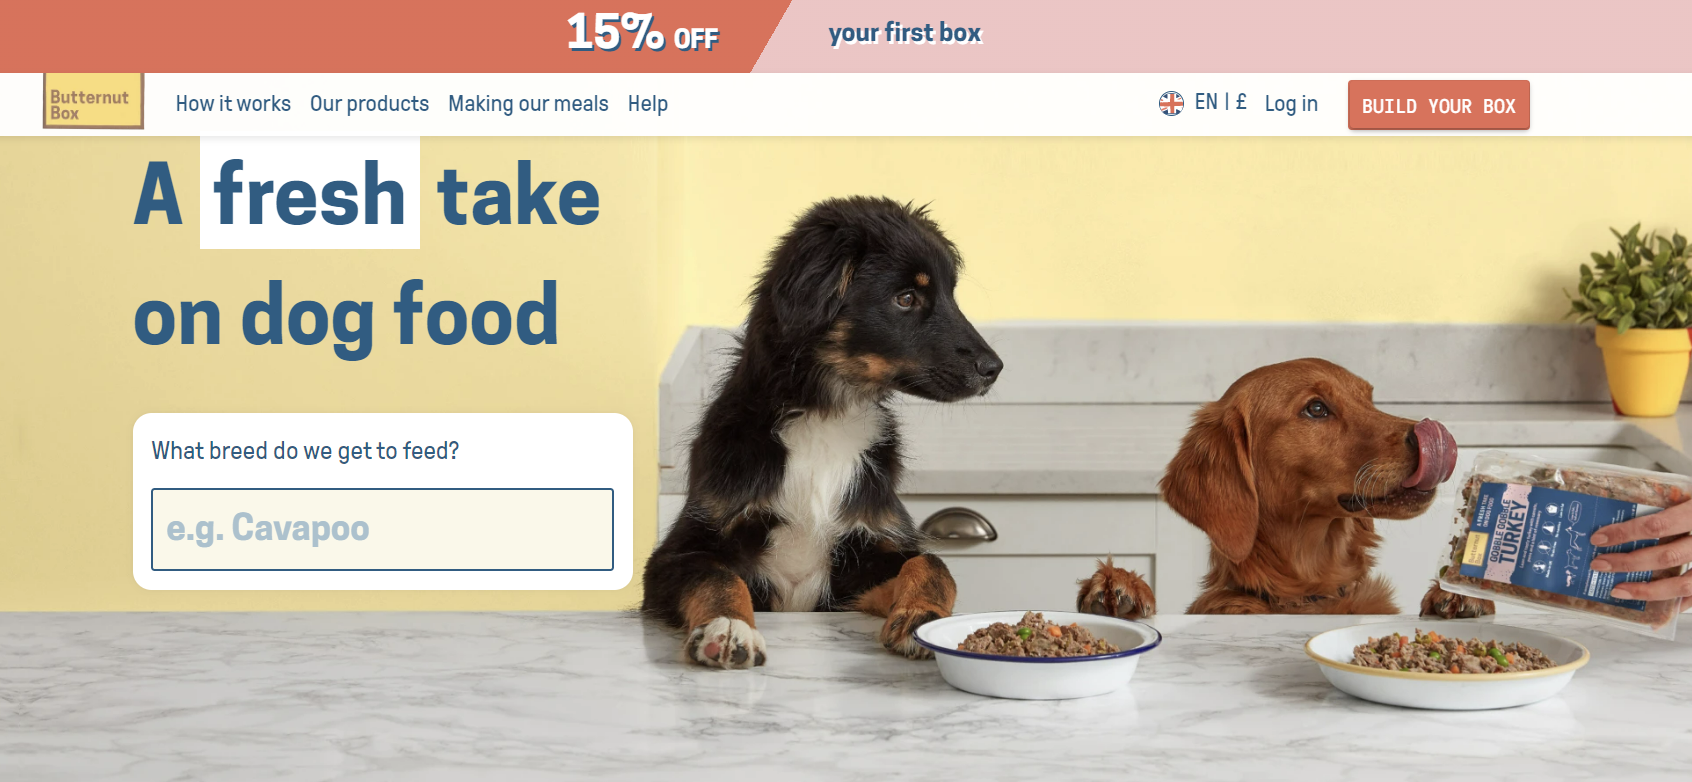 Butternut Box is a London-based leading fresh pet food brand. 